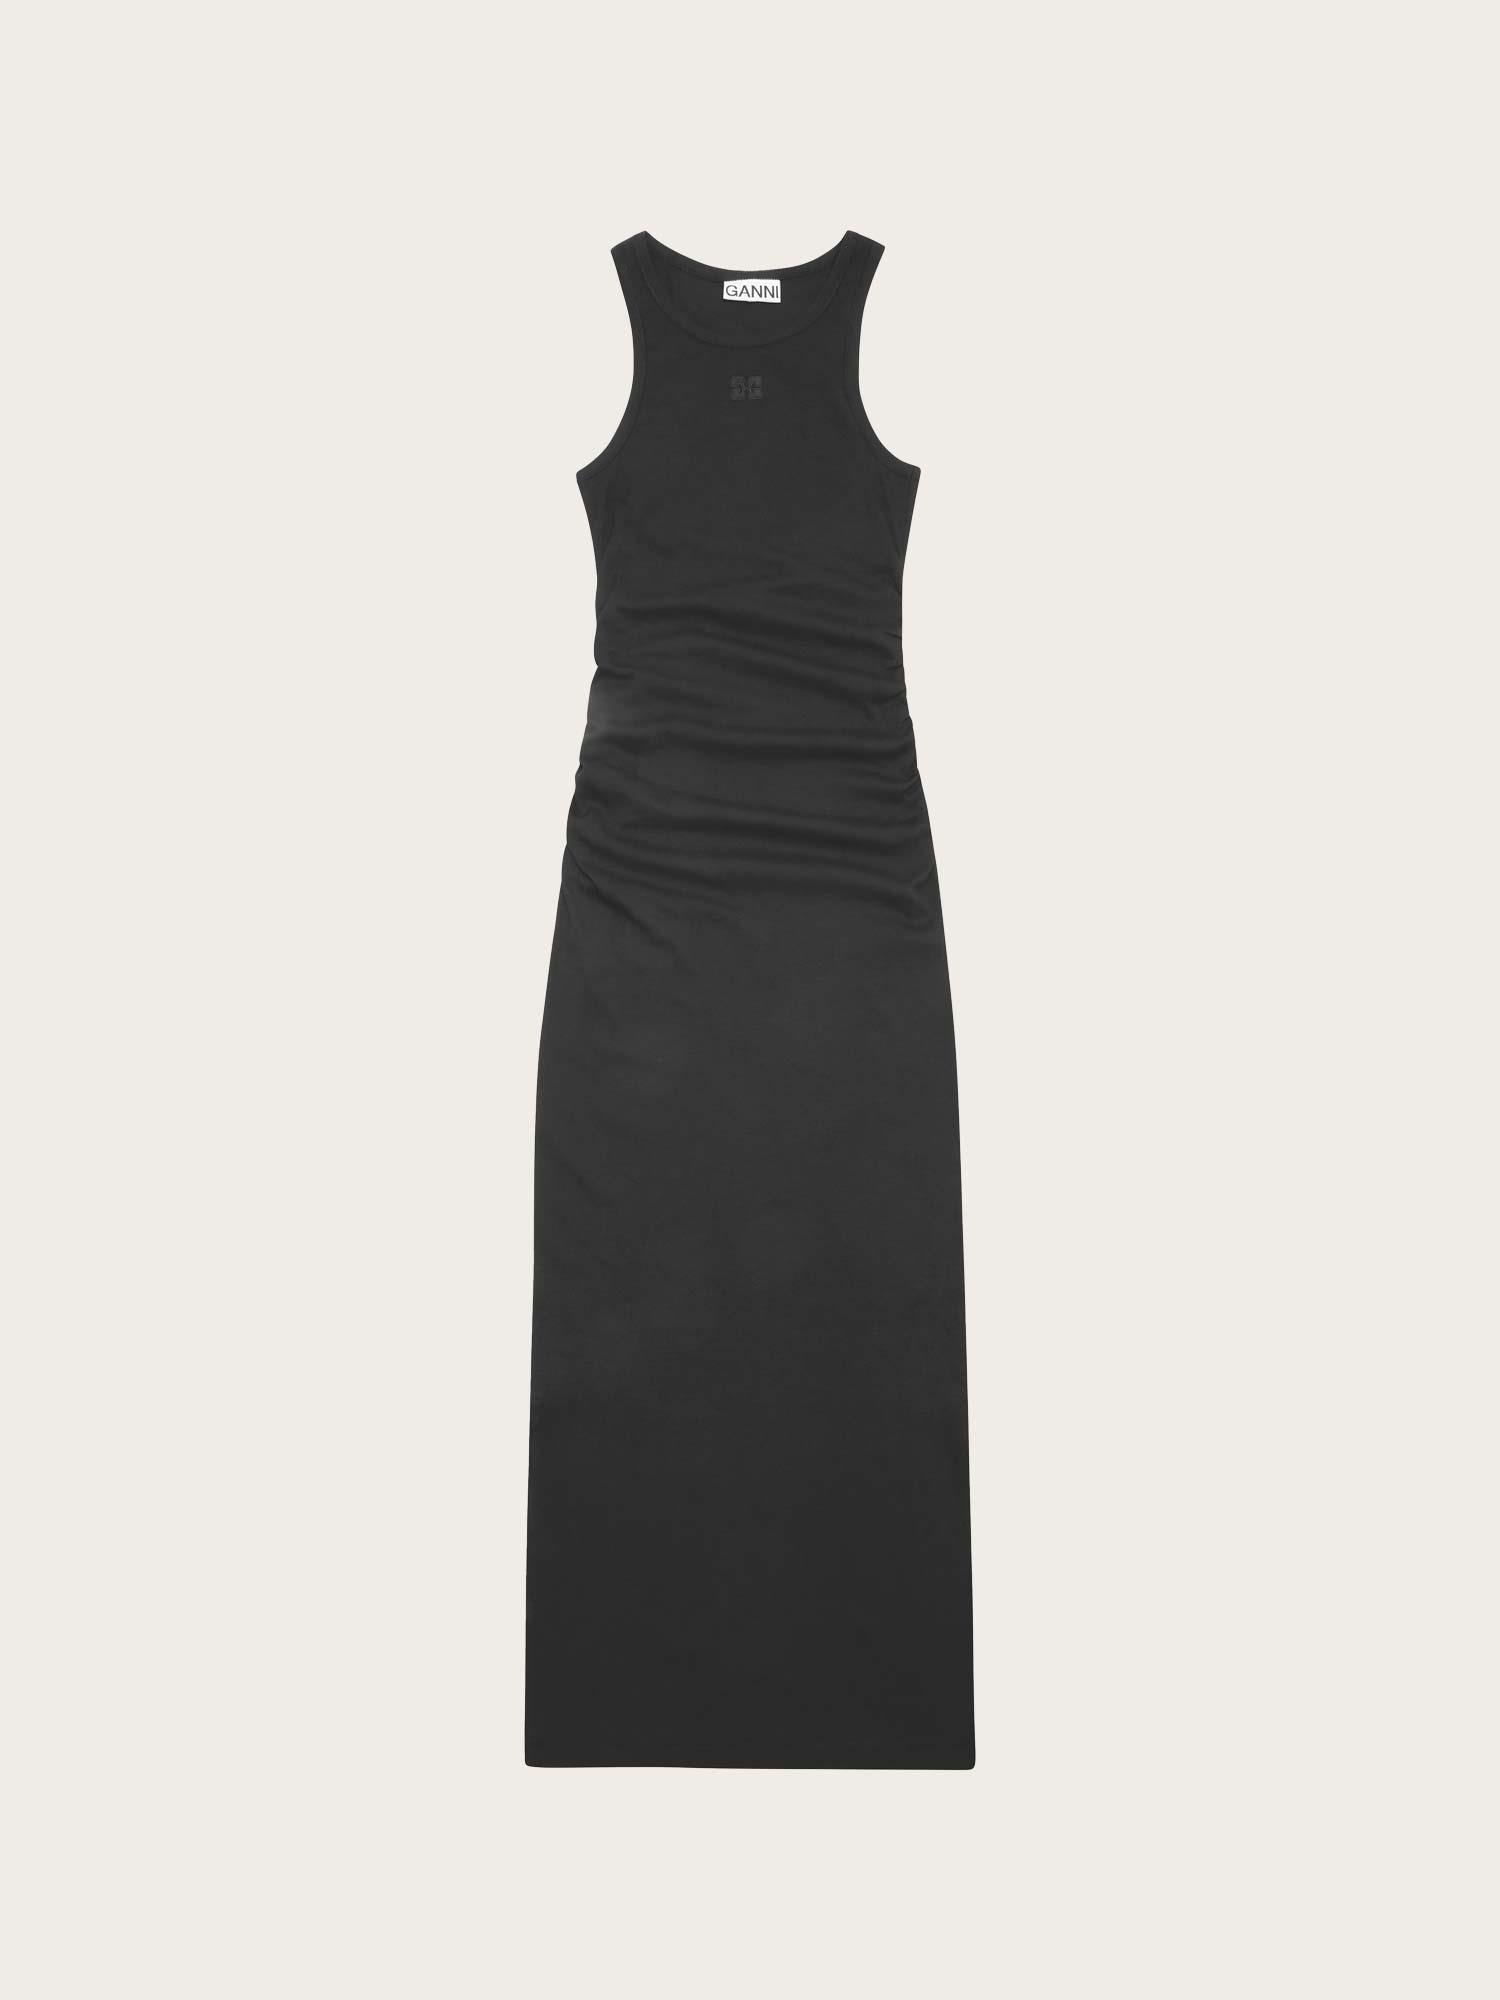 T3935 Soft Cotton Rib Tank Top Long Dress - Black